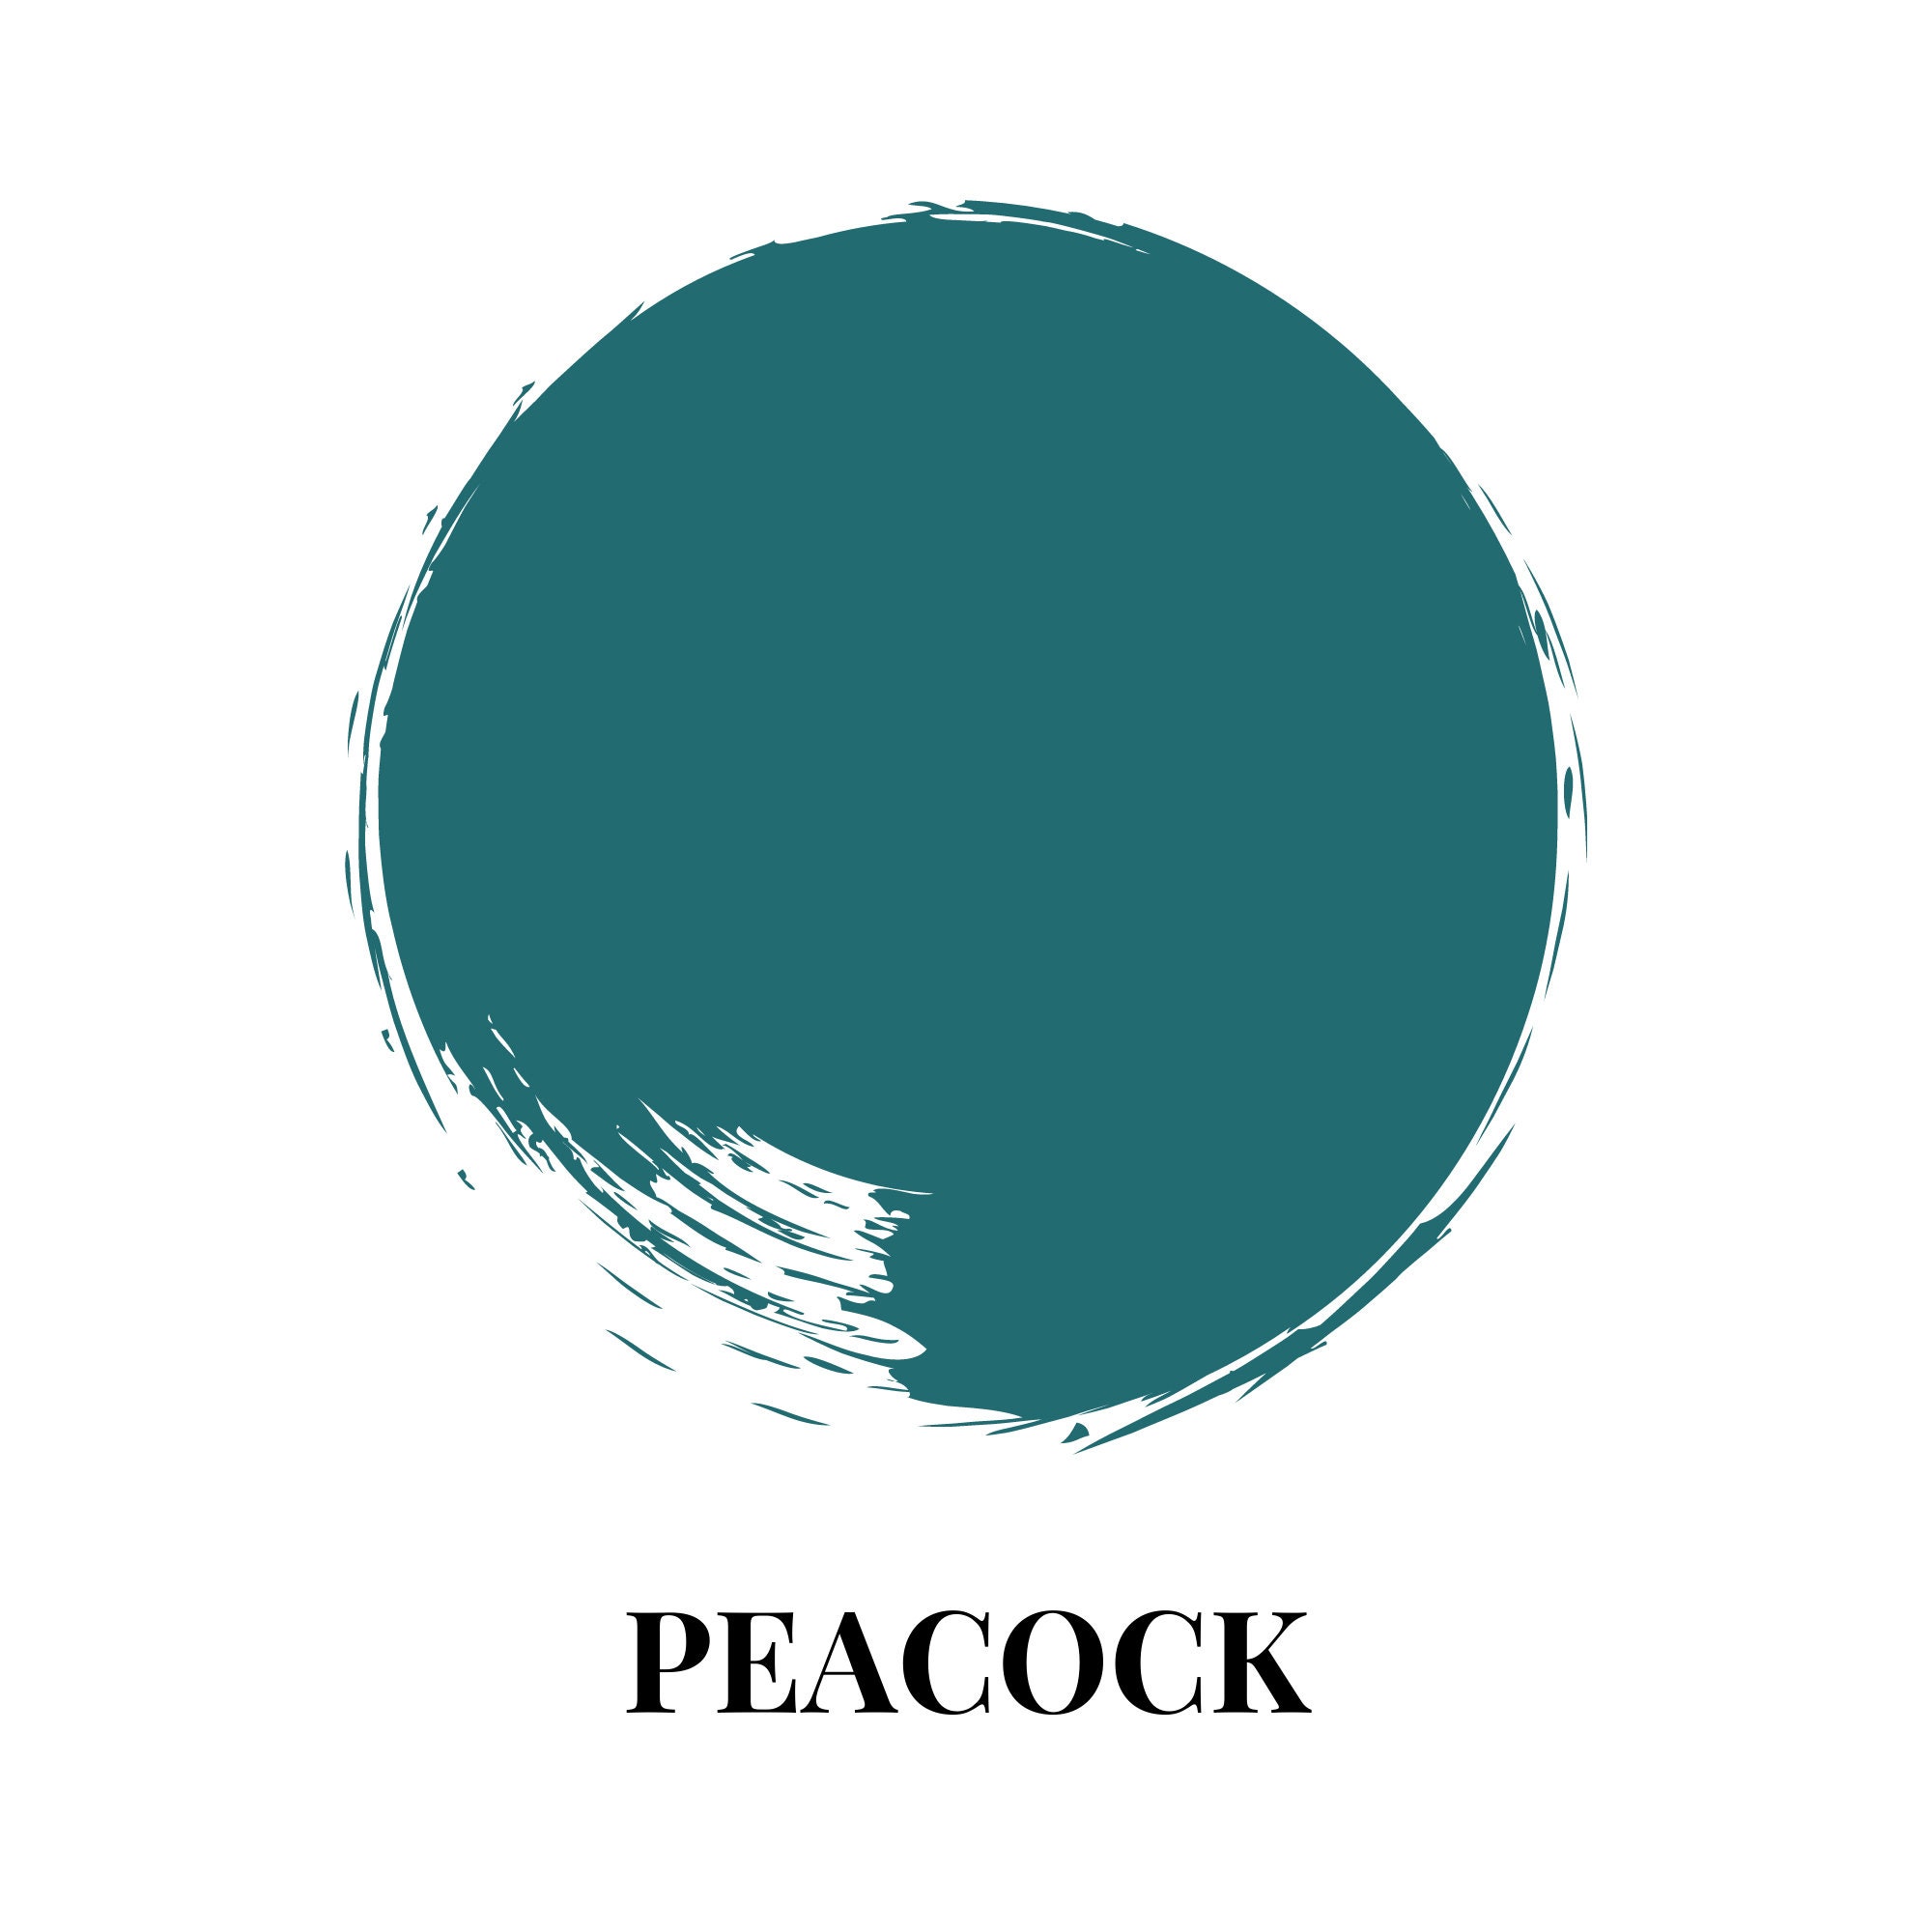 Rit DyeMore Liquid Dye, Peacock Green 7 Fl Oz (Pack of 1)